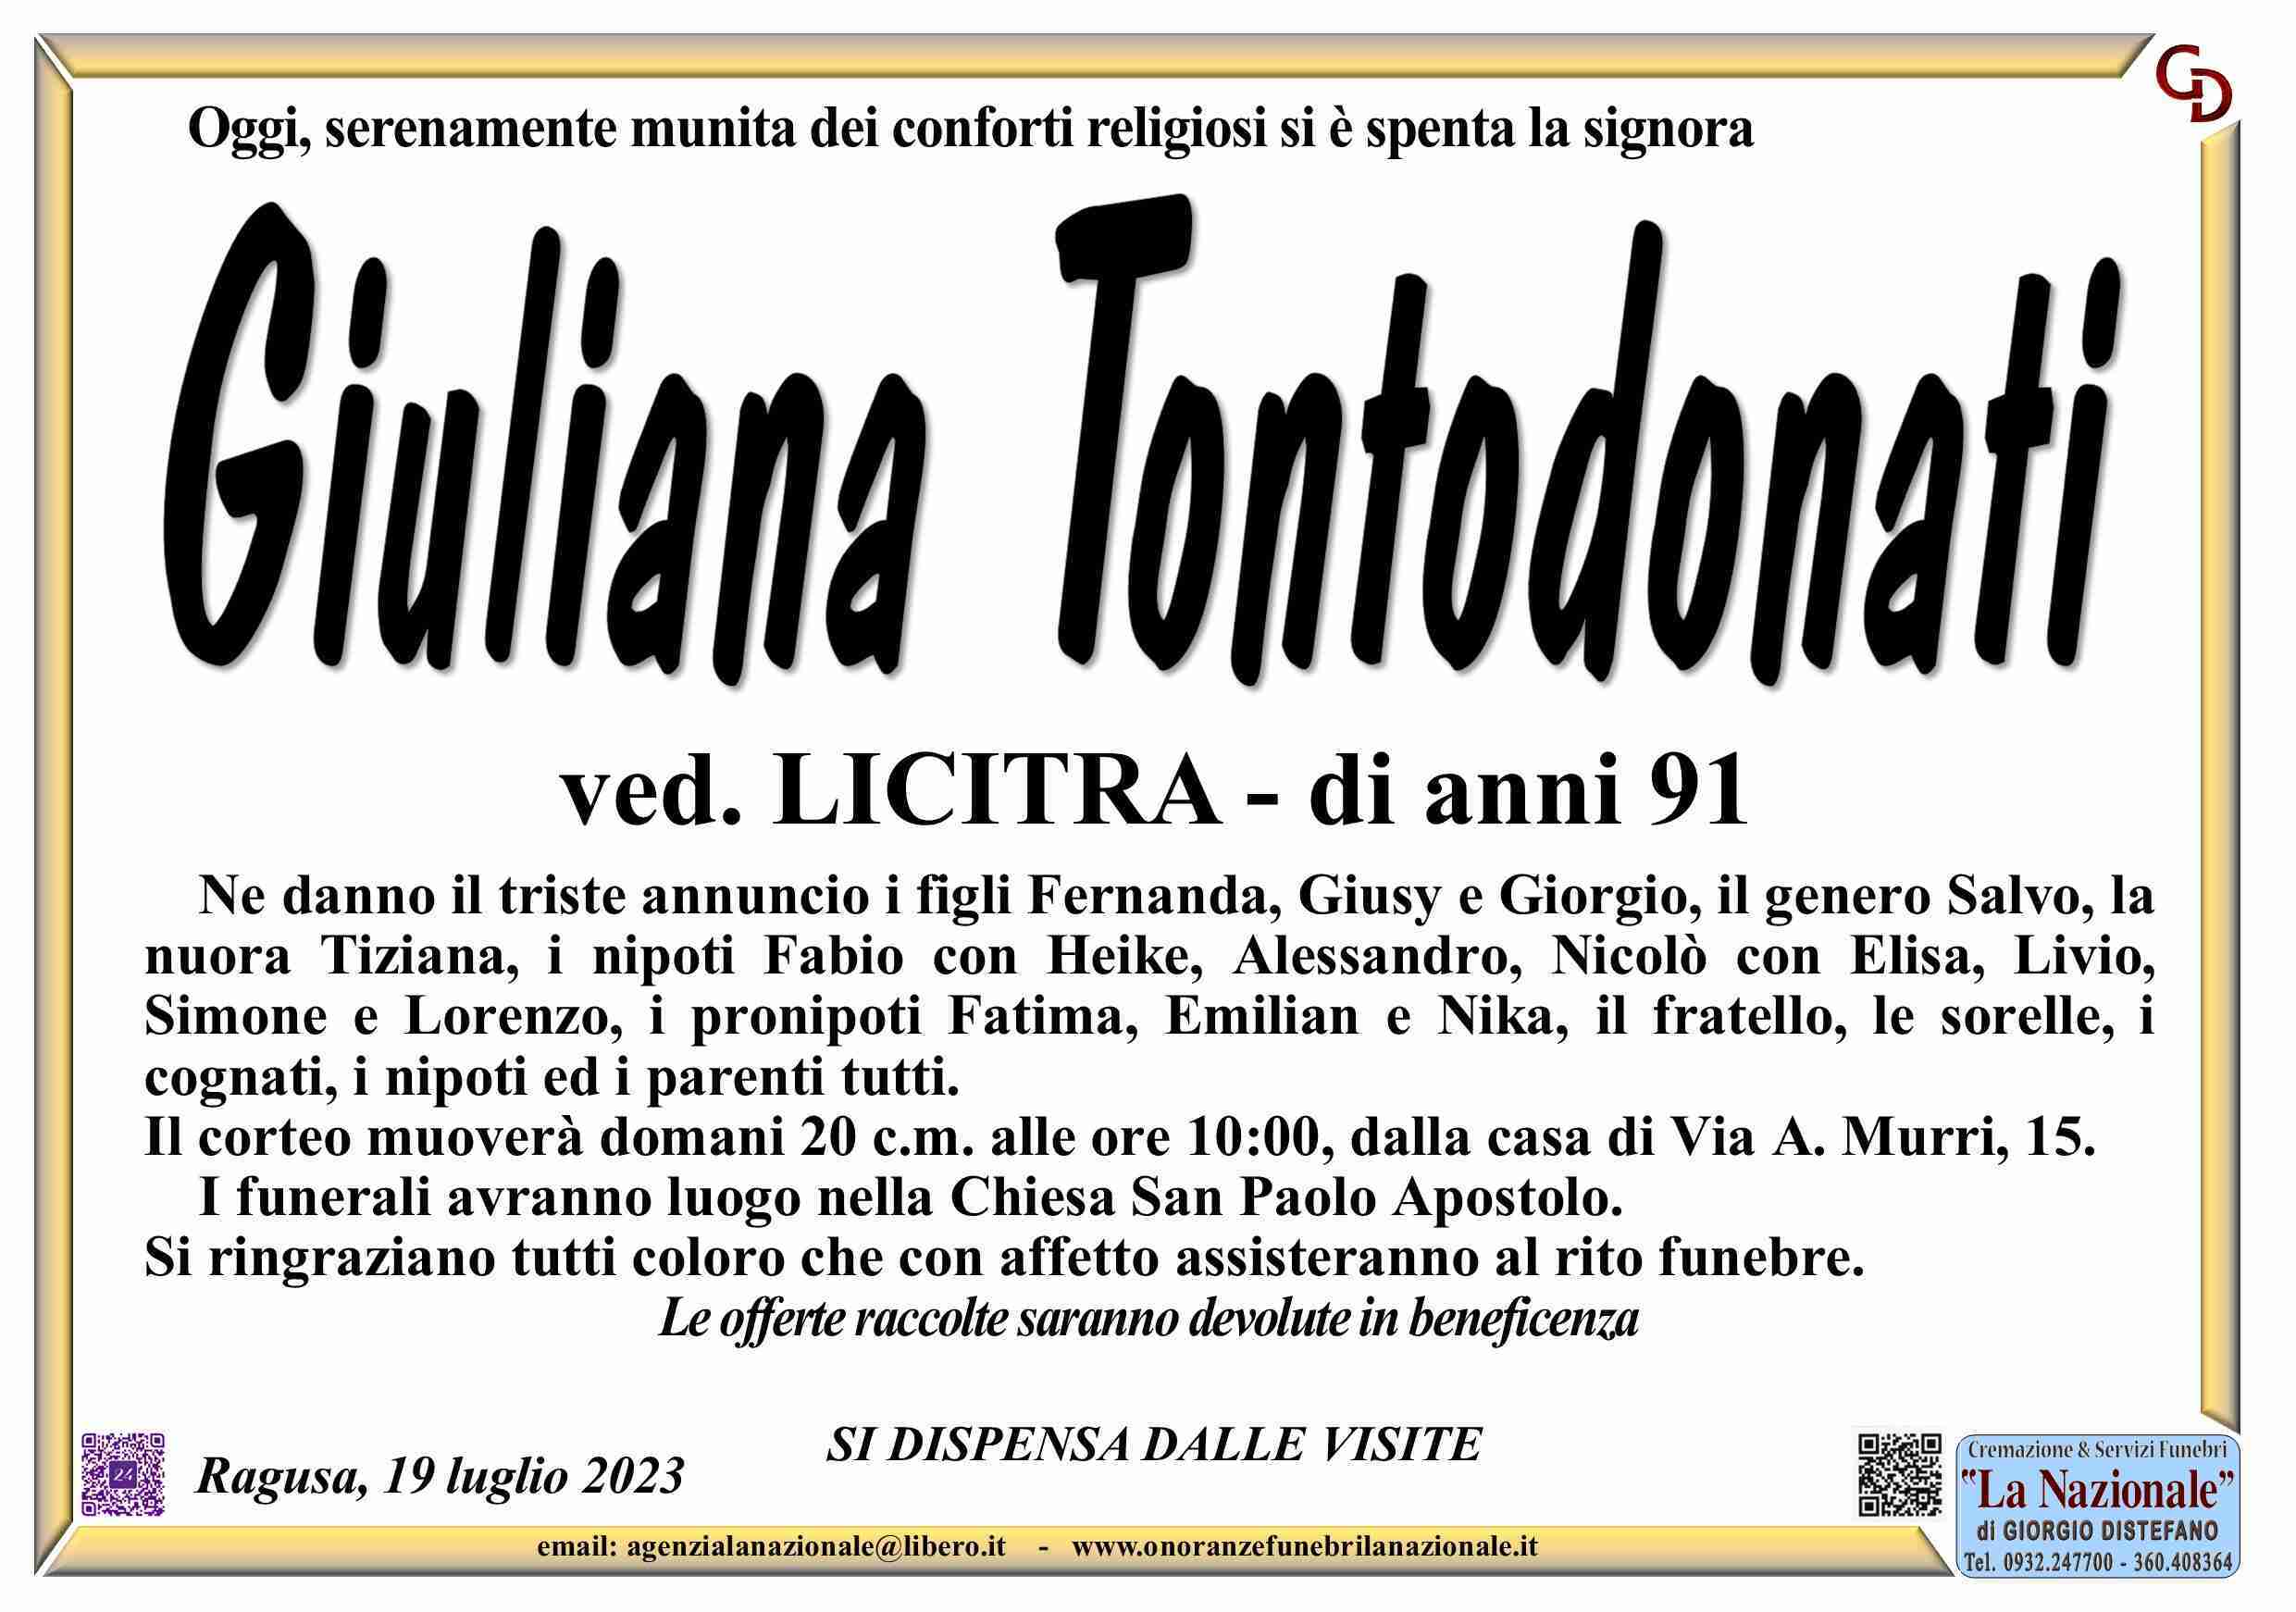 Giuliana Tontodonati